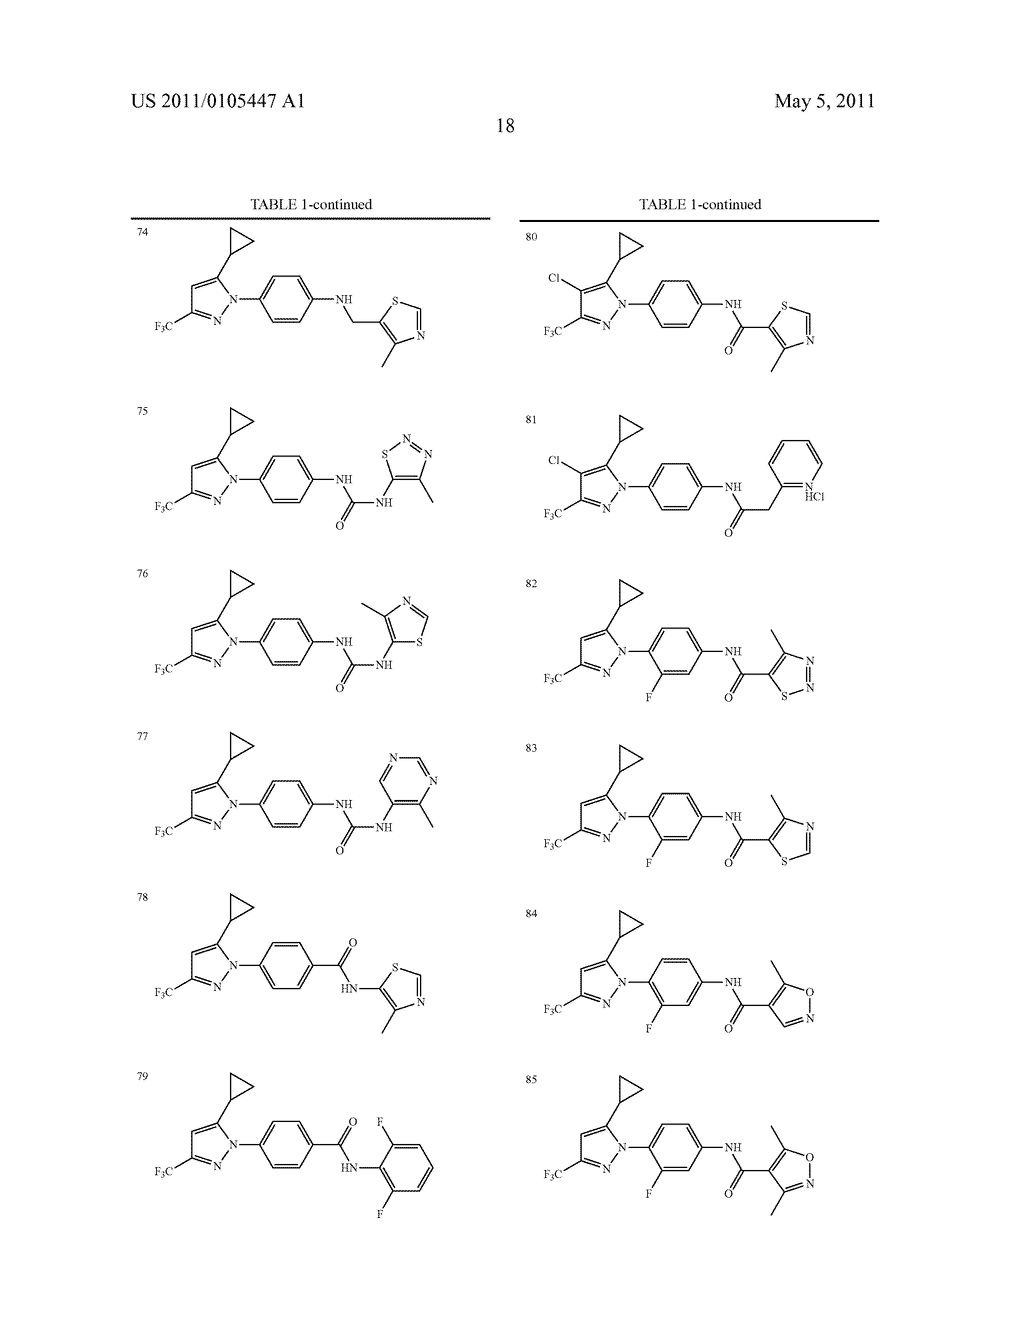 NOVEL MODULATORS OF CALCIUM RELEASE-ACTIVATED CALCIUM CHANNEL - diagram, schematic, and image 19